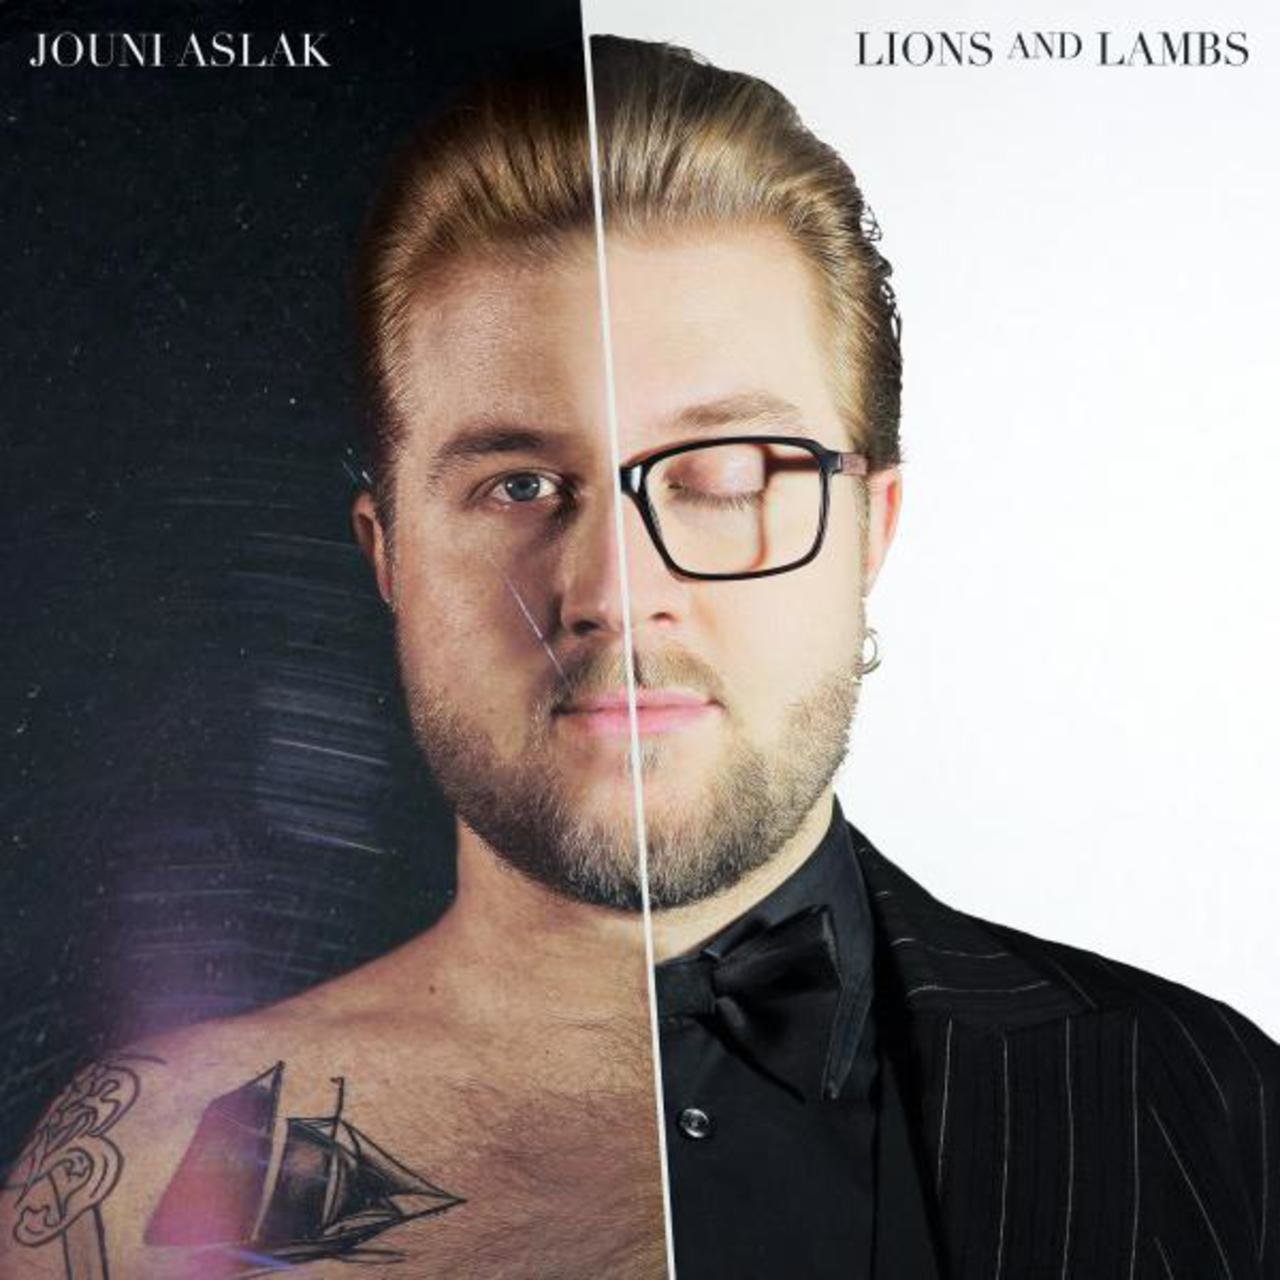 Jouni Aslak Lions and Lambs cover artwork